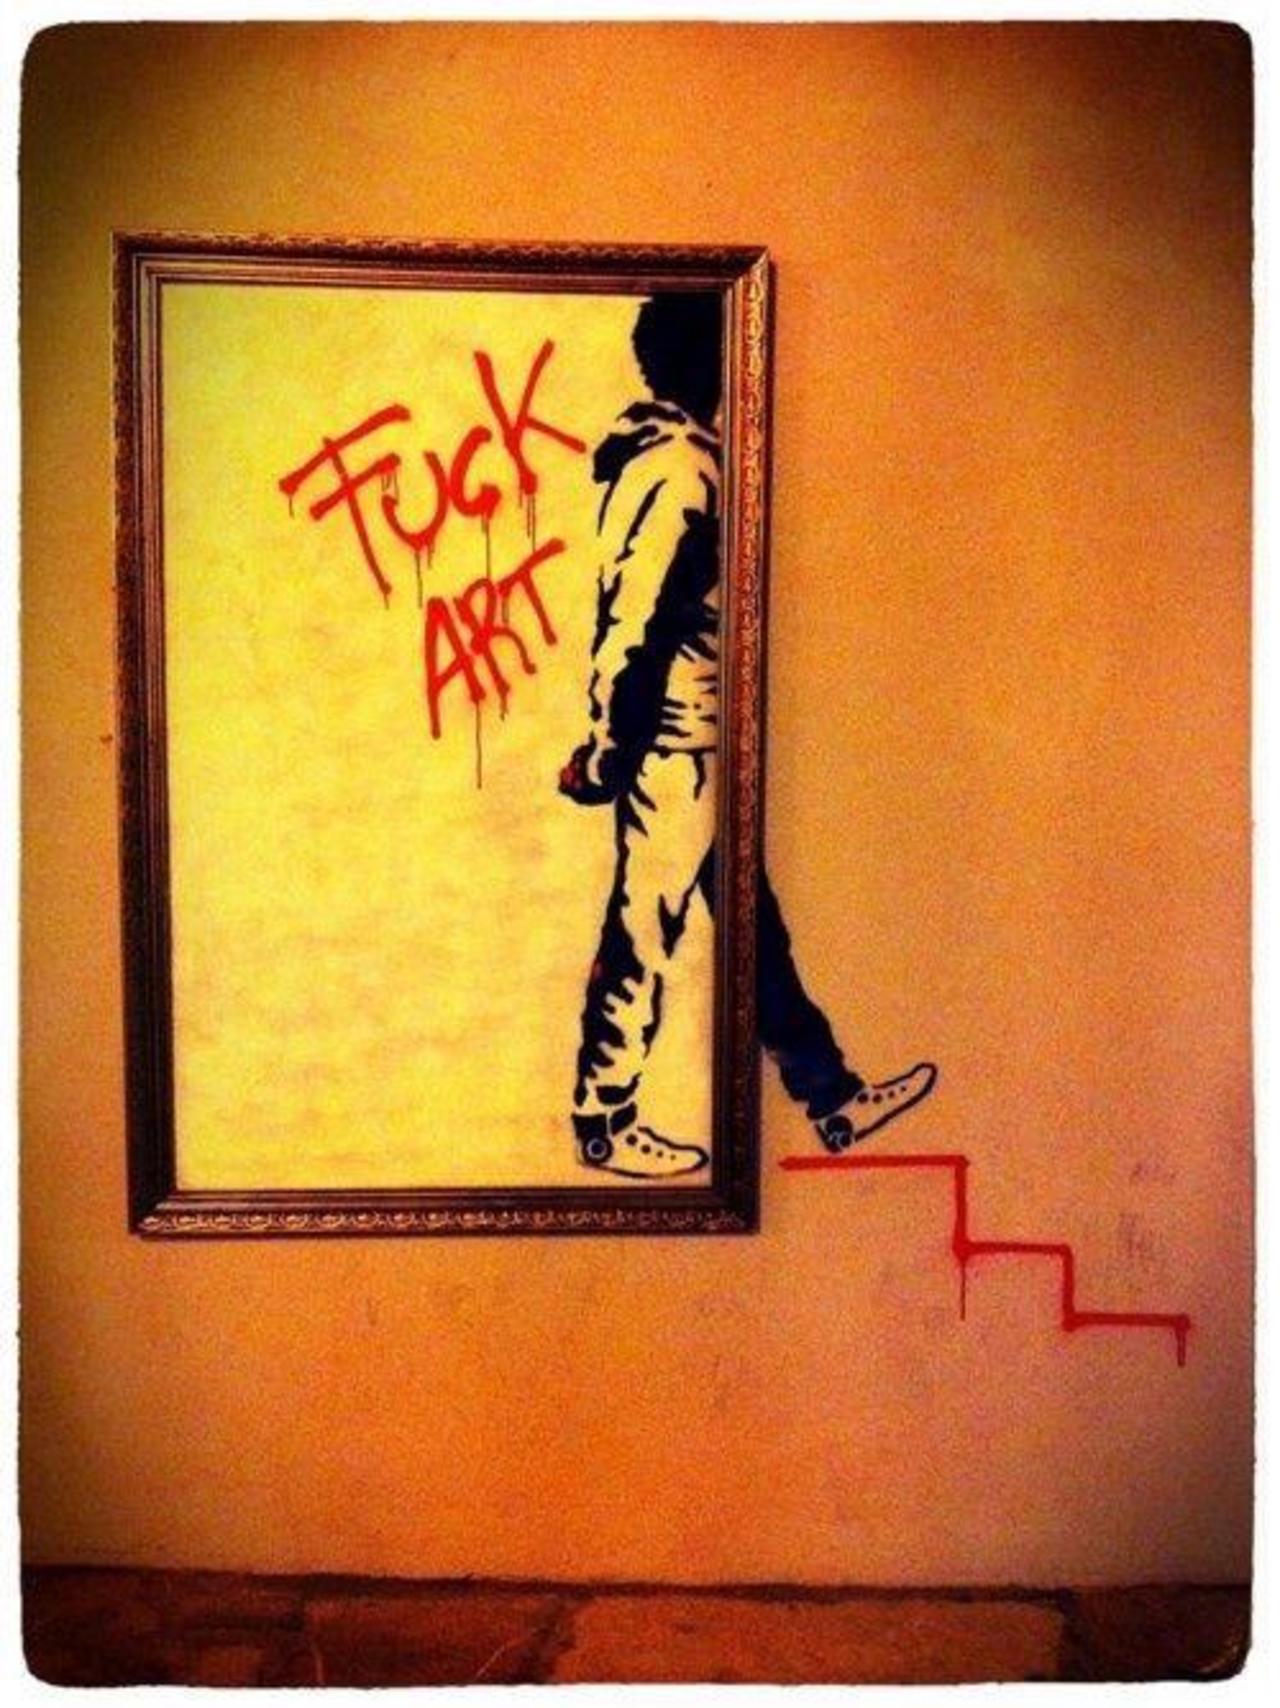 RT @BrayanAll: HeLL  Yeaaahhh!  #art  #streetart  #graffiti http://t.co/wQS49w0Oci